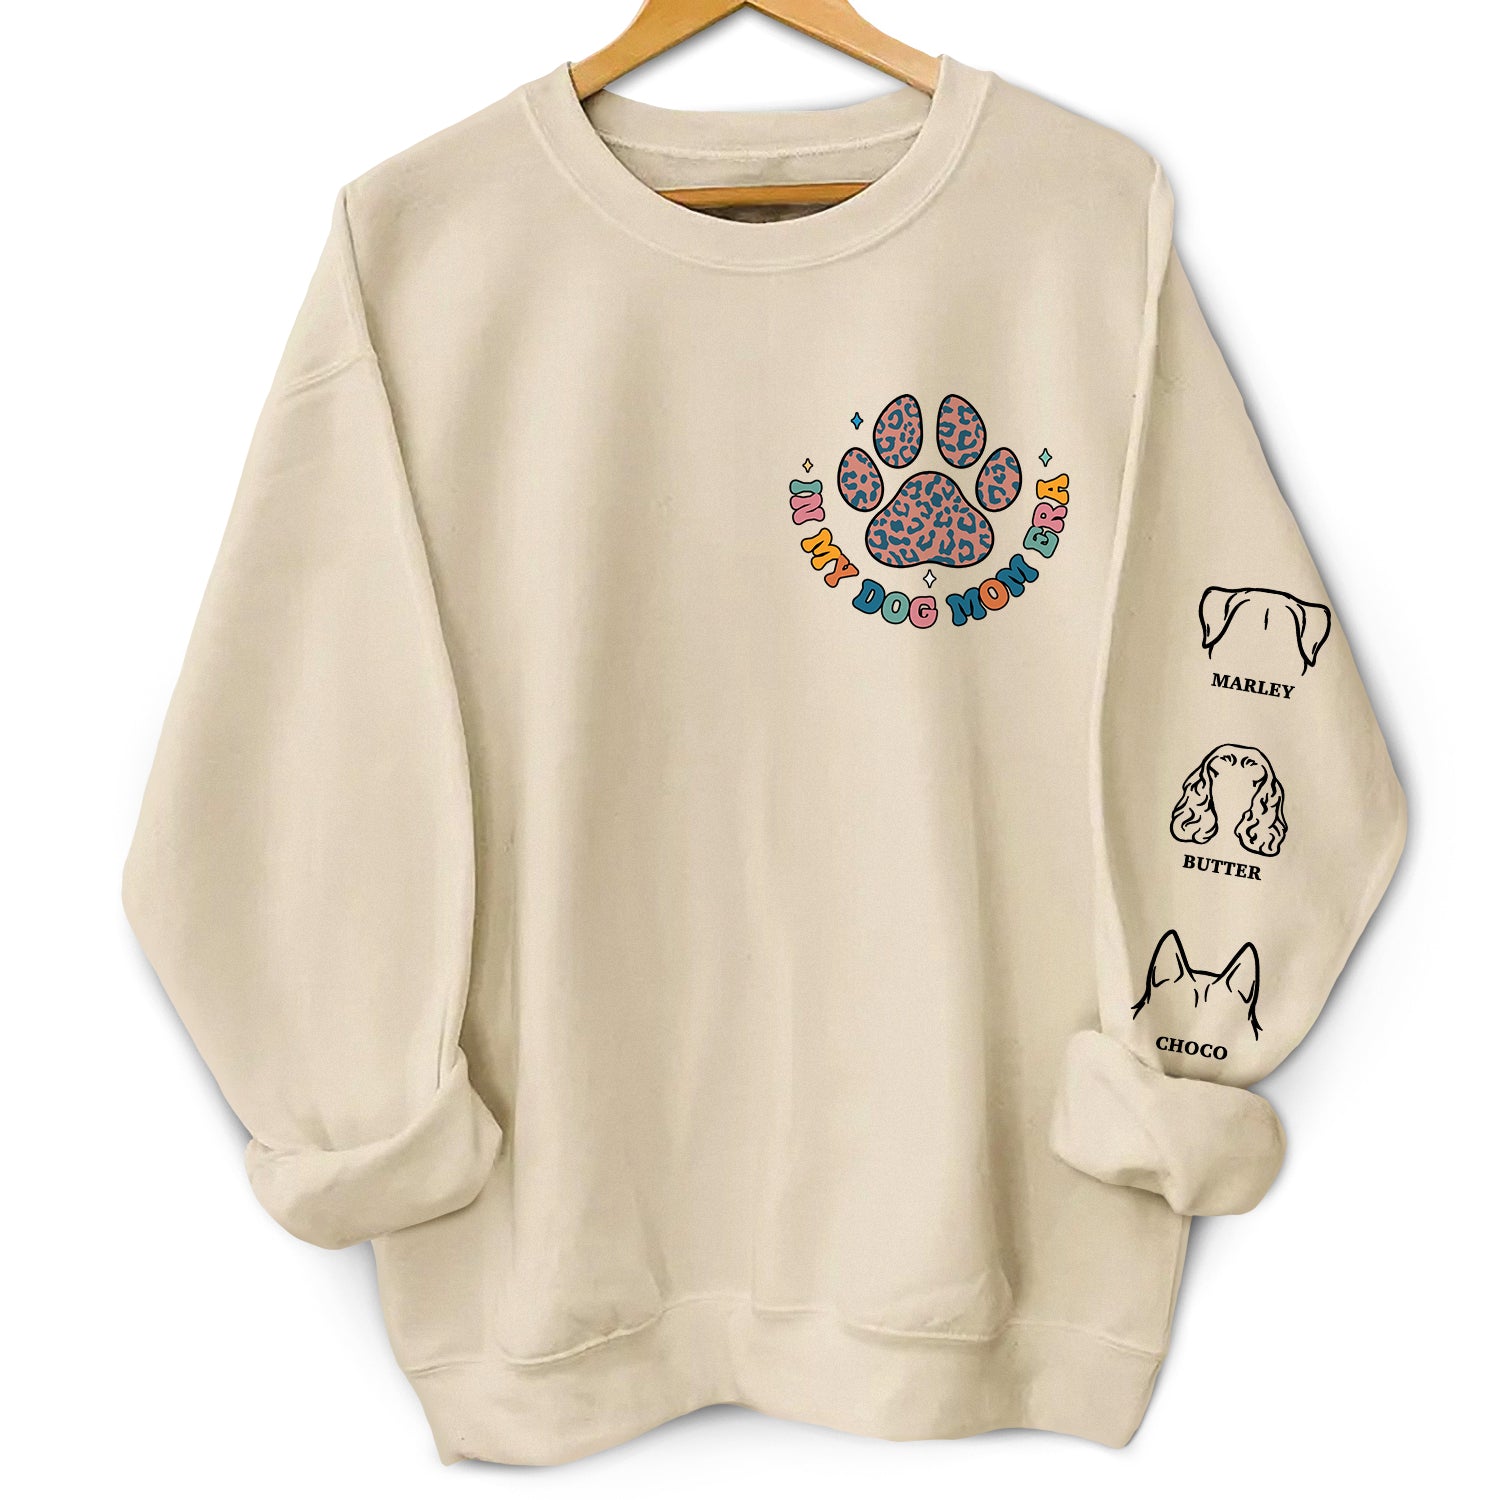 In My Dog Mom Era - Birthday, Loving Gift For Dog Lovers, Women - Personalized Unisex Sweatshirt With Design On Sleeve